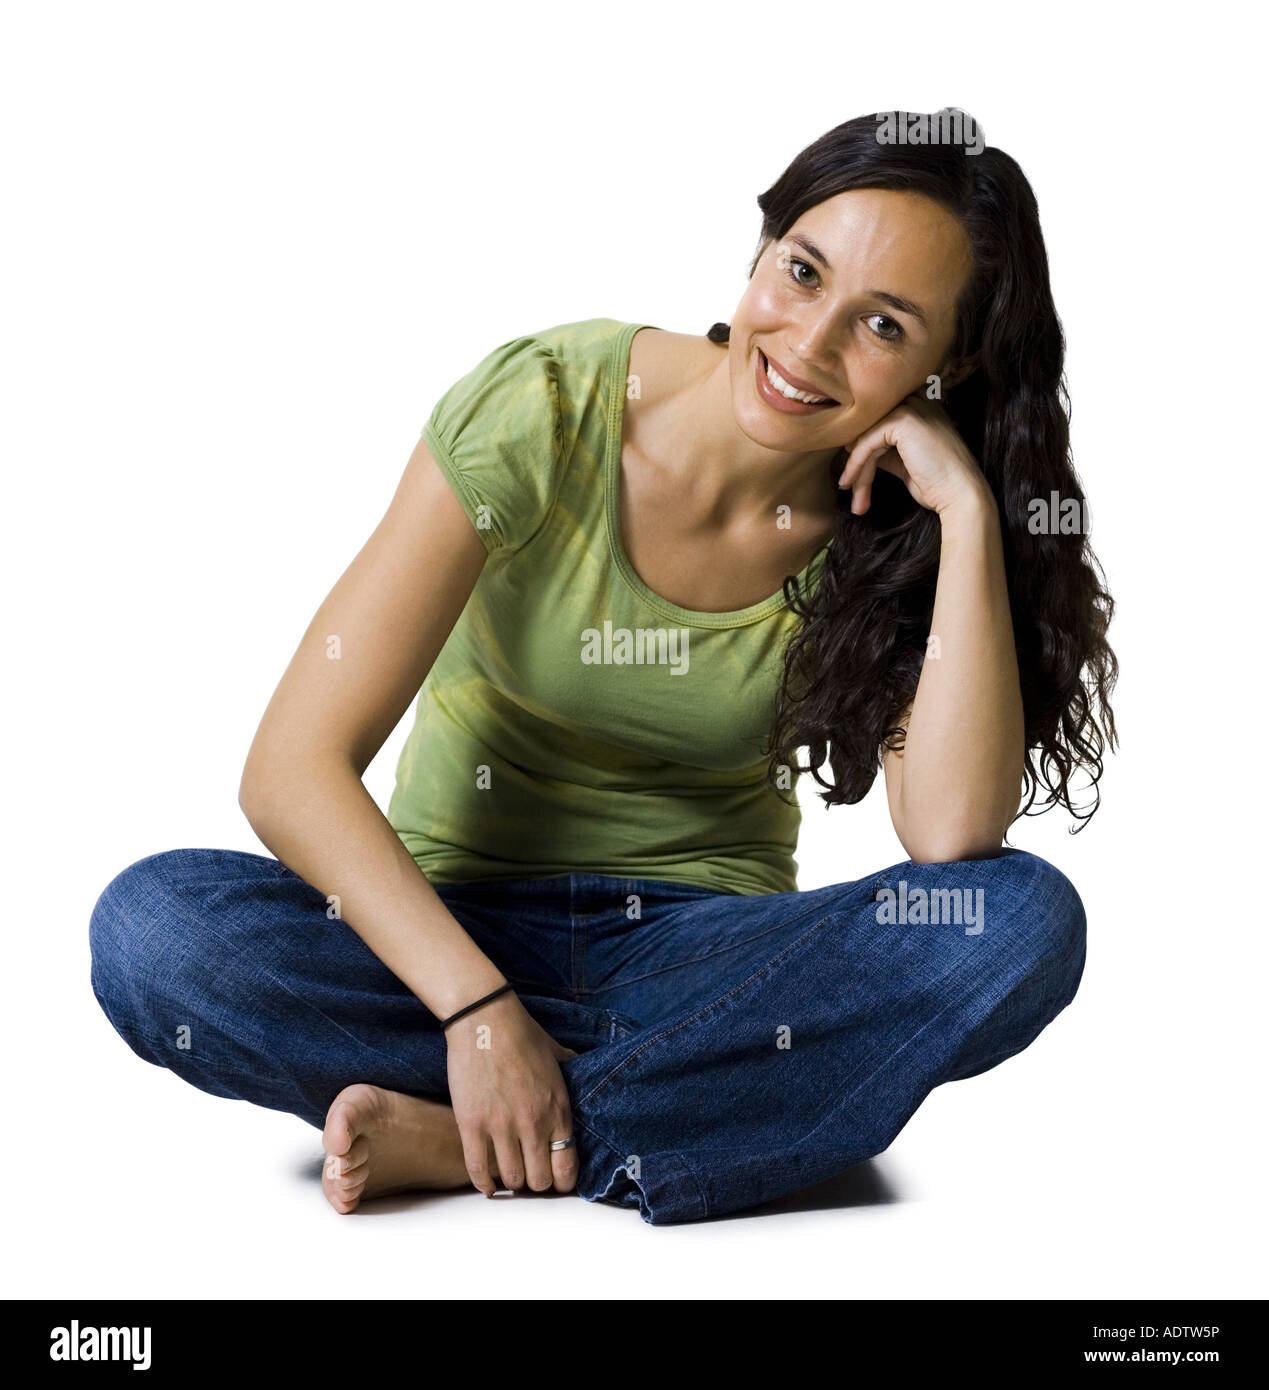 Woman sitting cross legged smiling Stock Photo